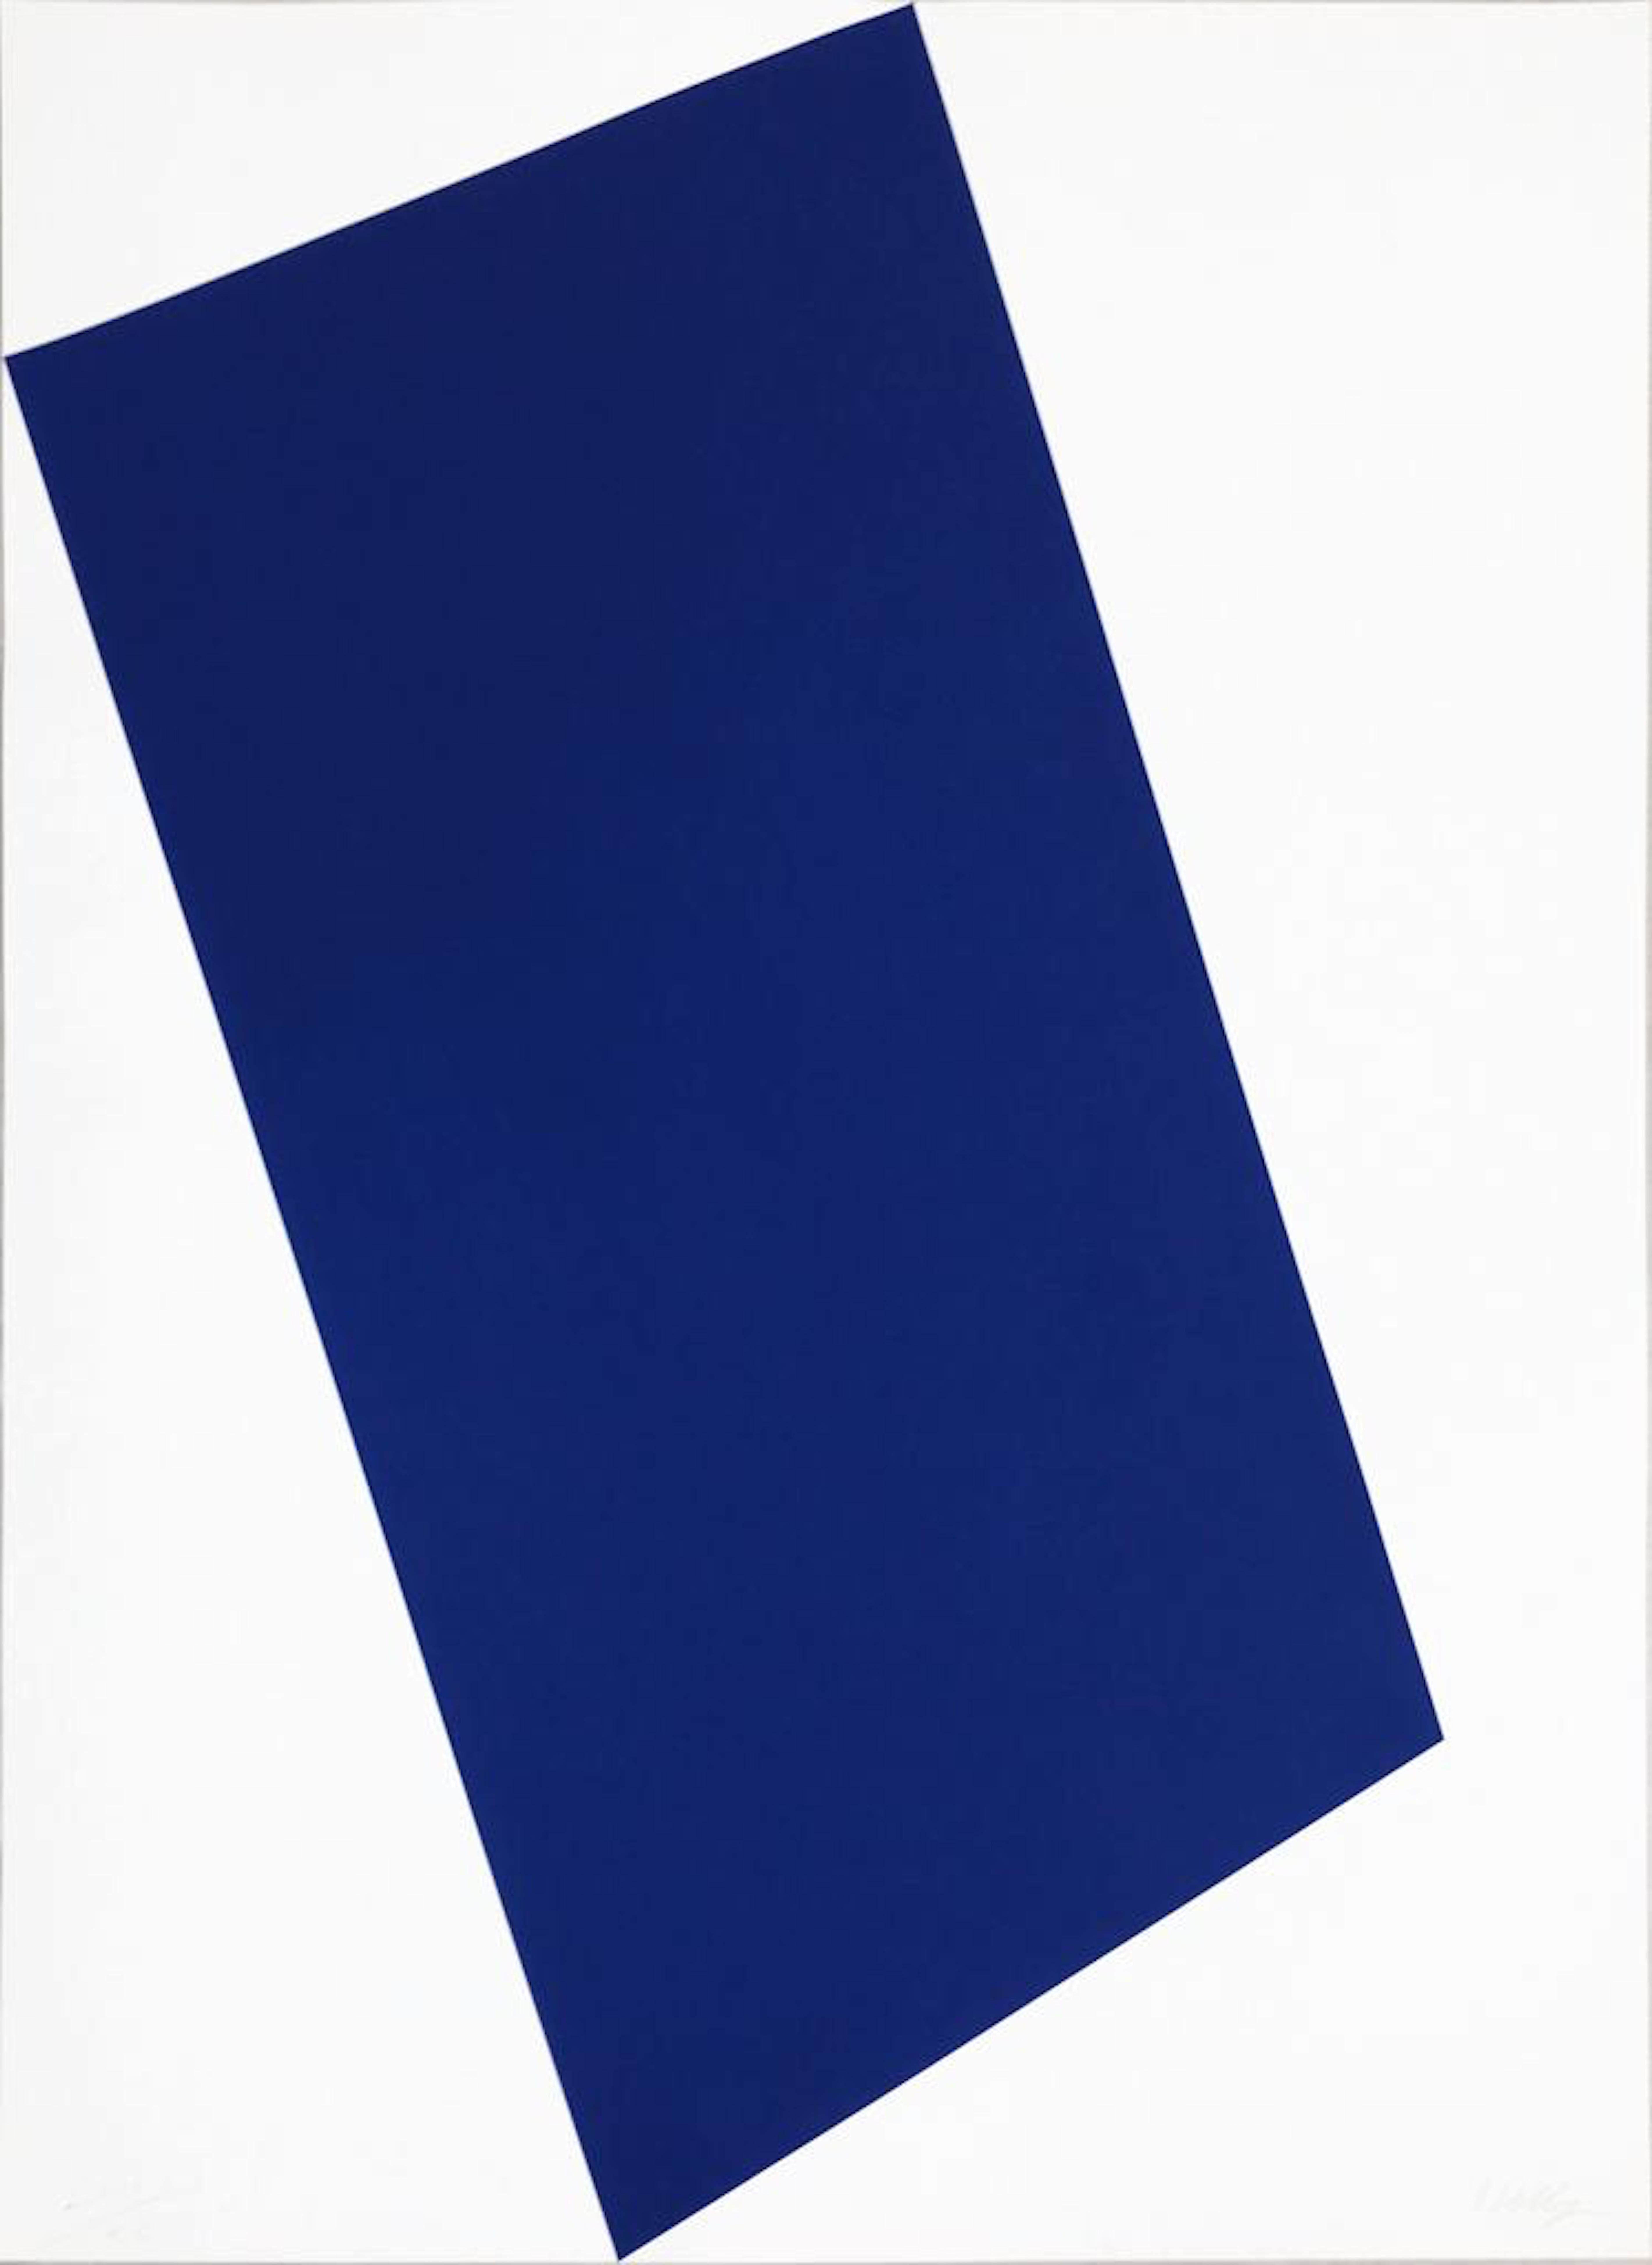 Blue (for Leo) from the portfolio of Leo Castelli's 90th Birthday; 1997 - Print by Ellsworth Kelly